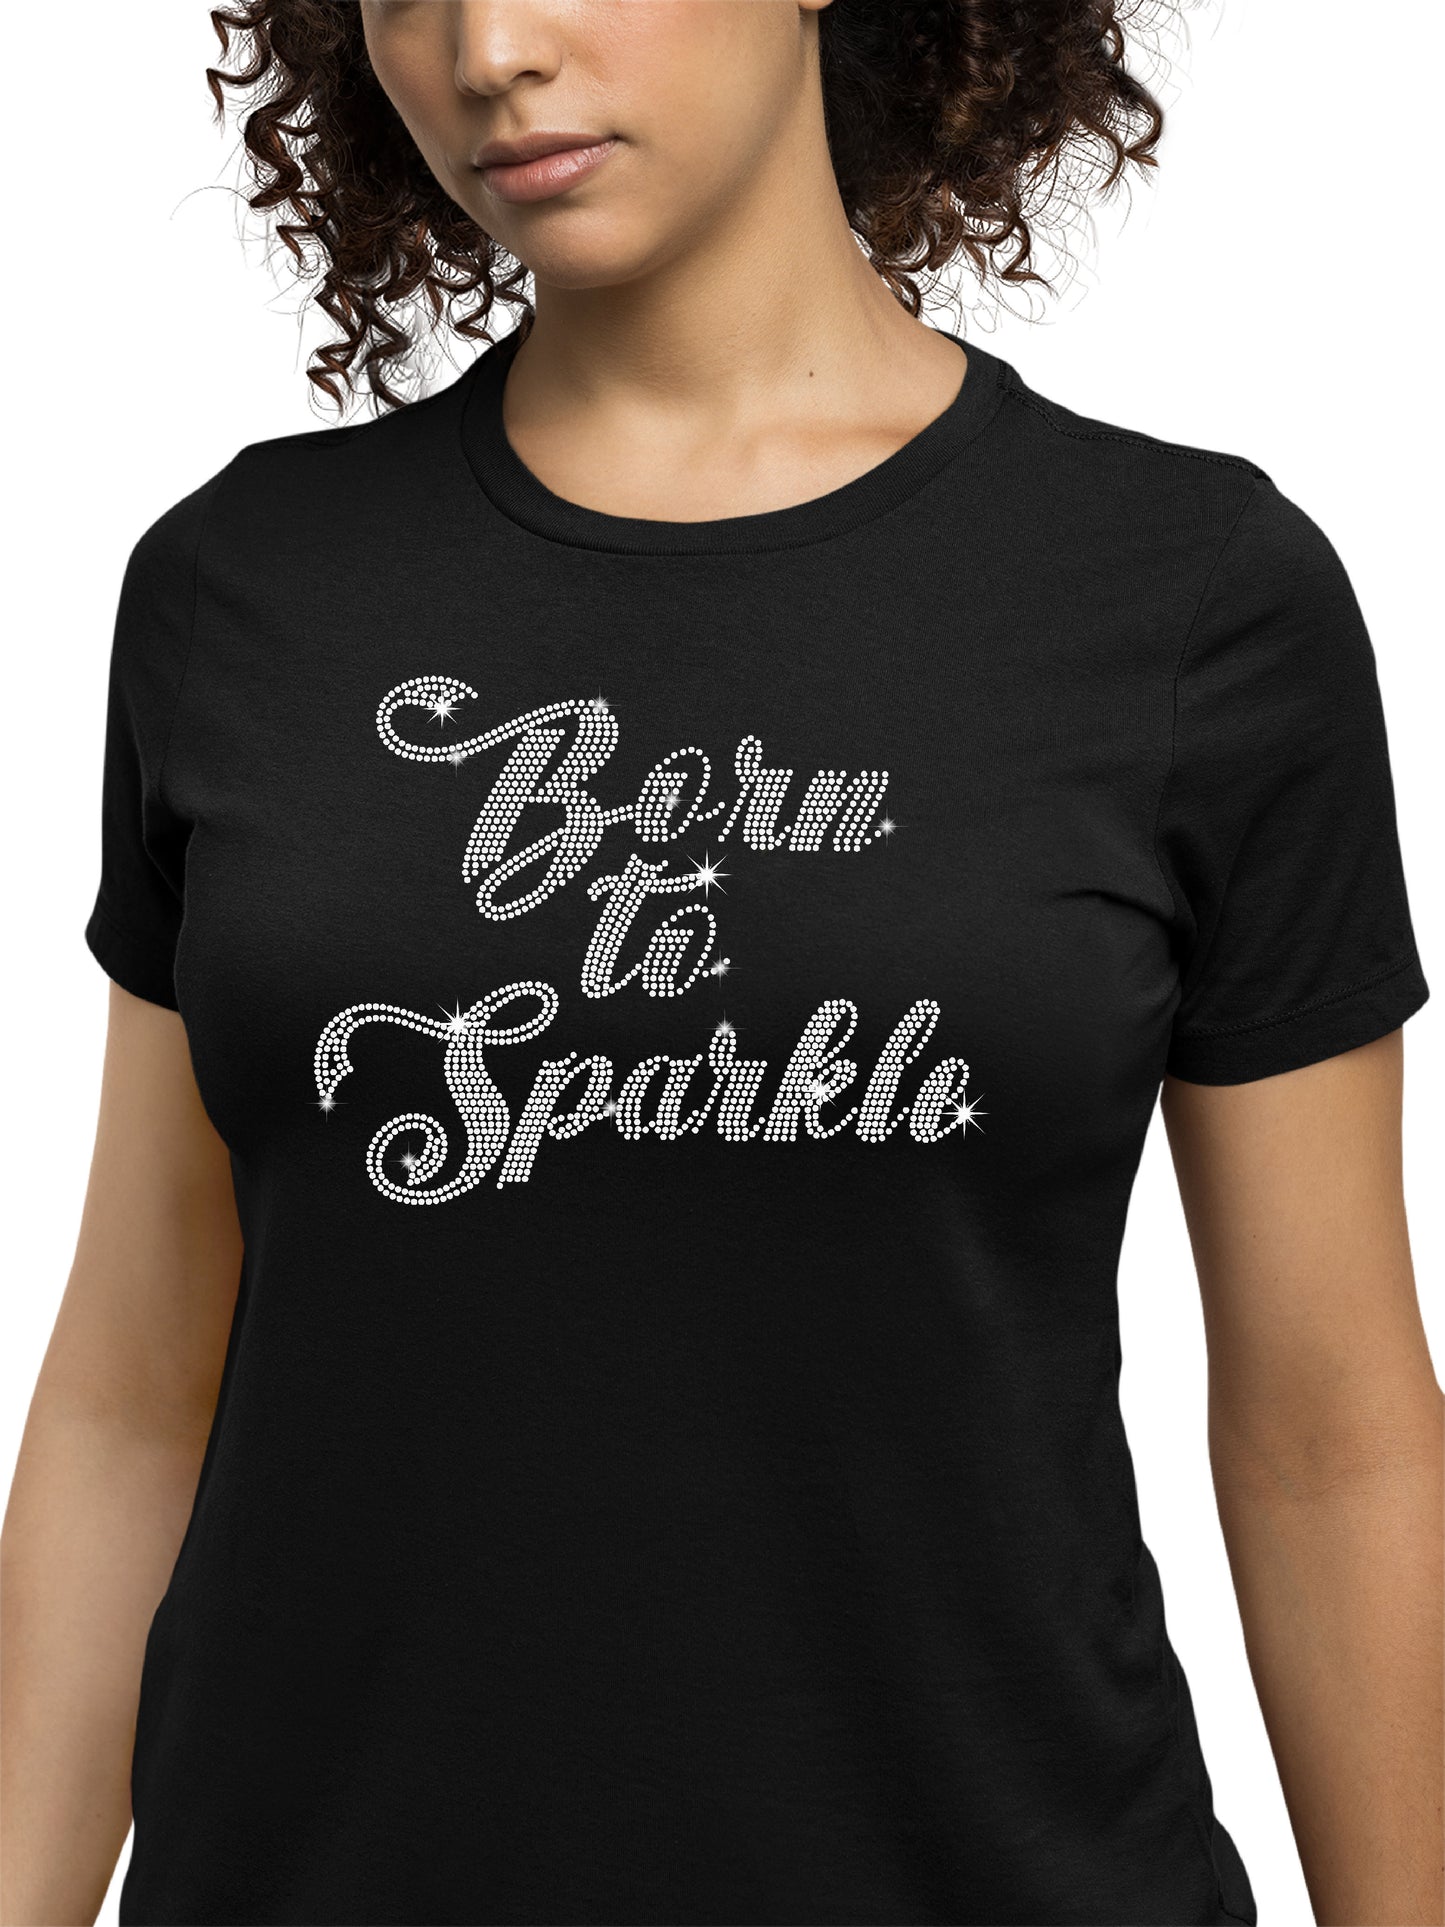 Born To Sparkle Rhinestone Bling T-Shirt